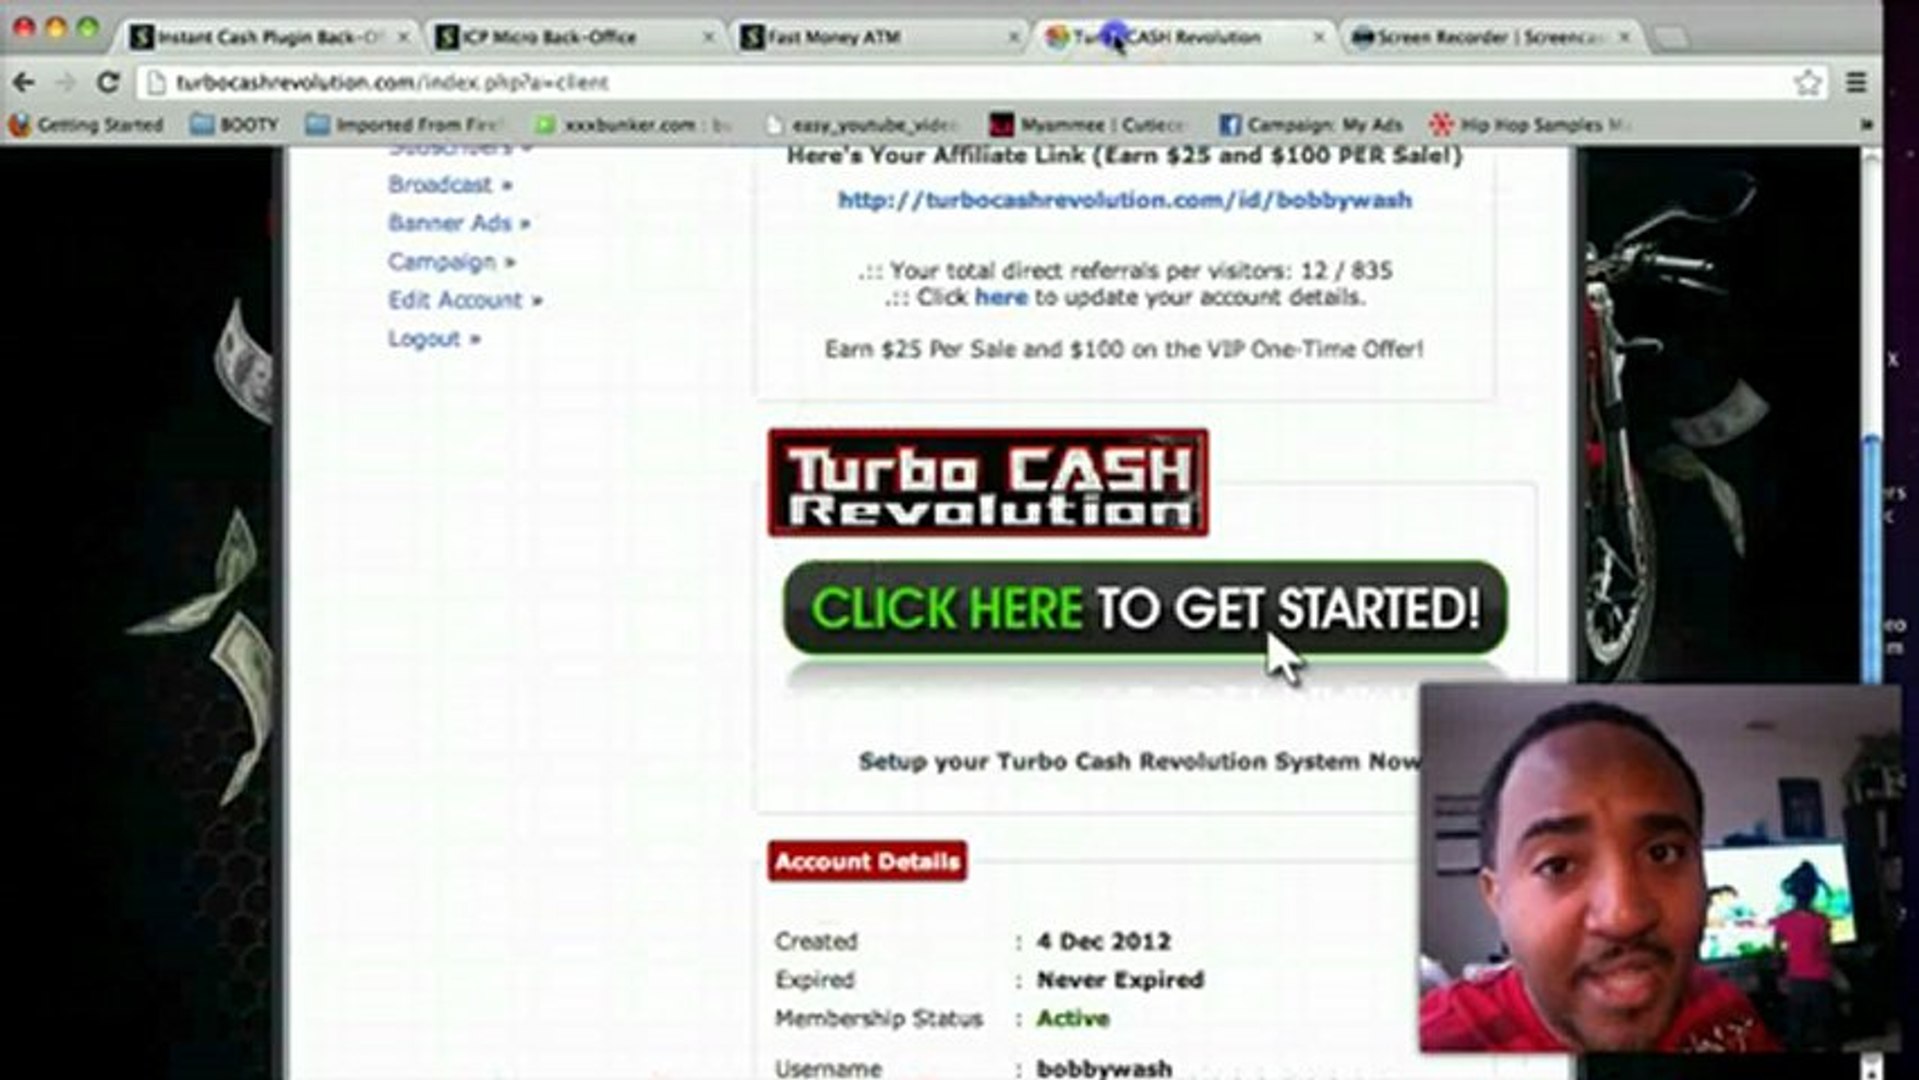 Turbo Cash Revolution-Instant Cash Plugin-Fast Money ATM-ICP Micro-Bobby Washington Review